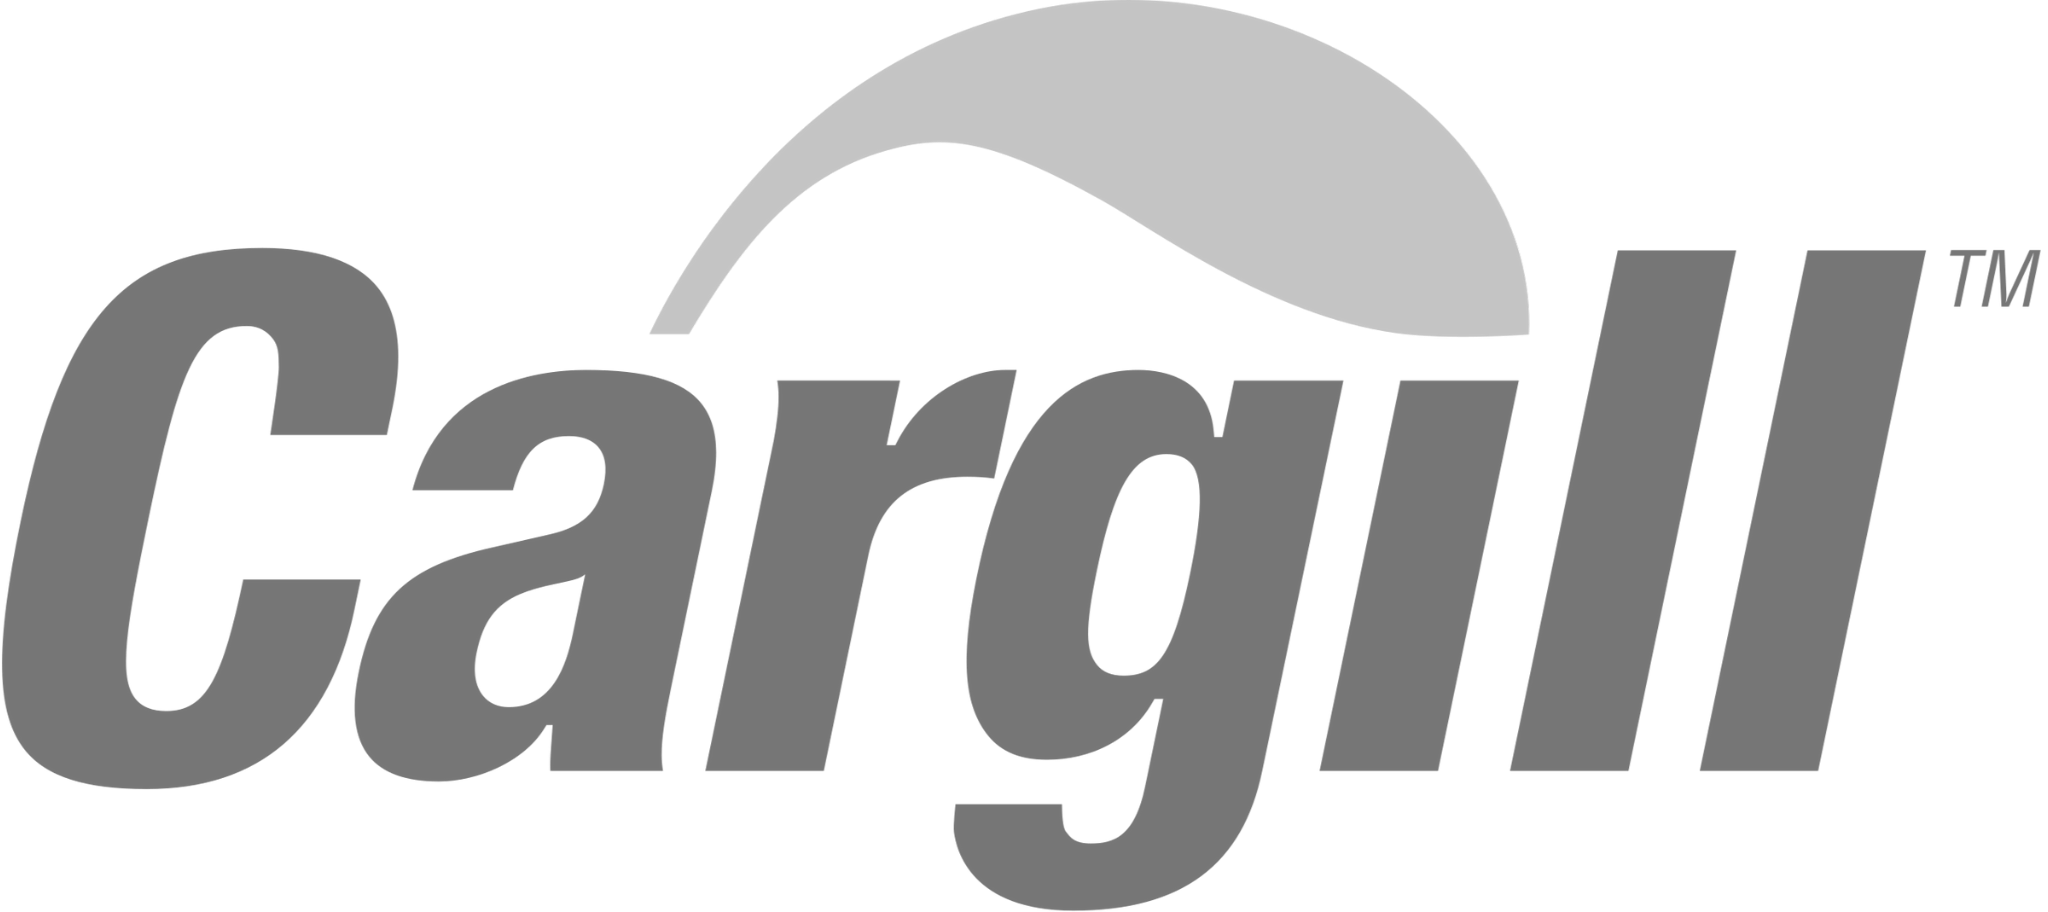 Cargill логотип. Каргилл иконка. Каргилл без фона. Логотип Каргилл на прозрачном фоне.